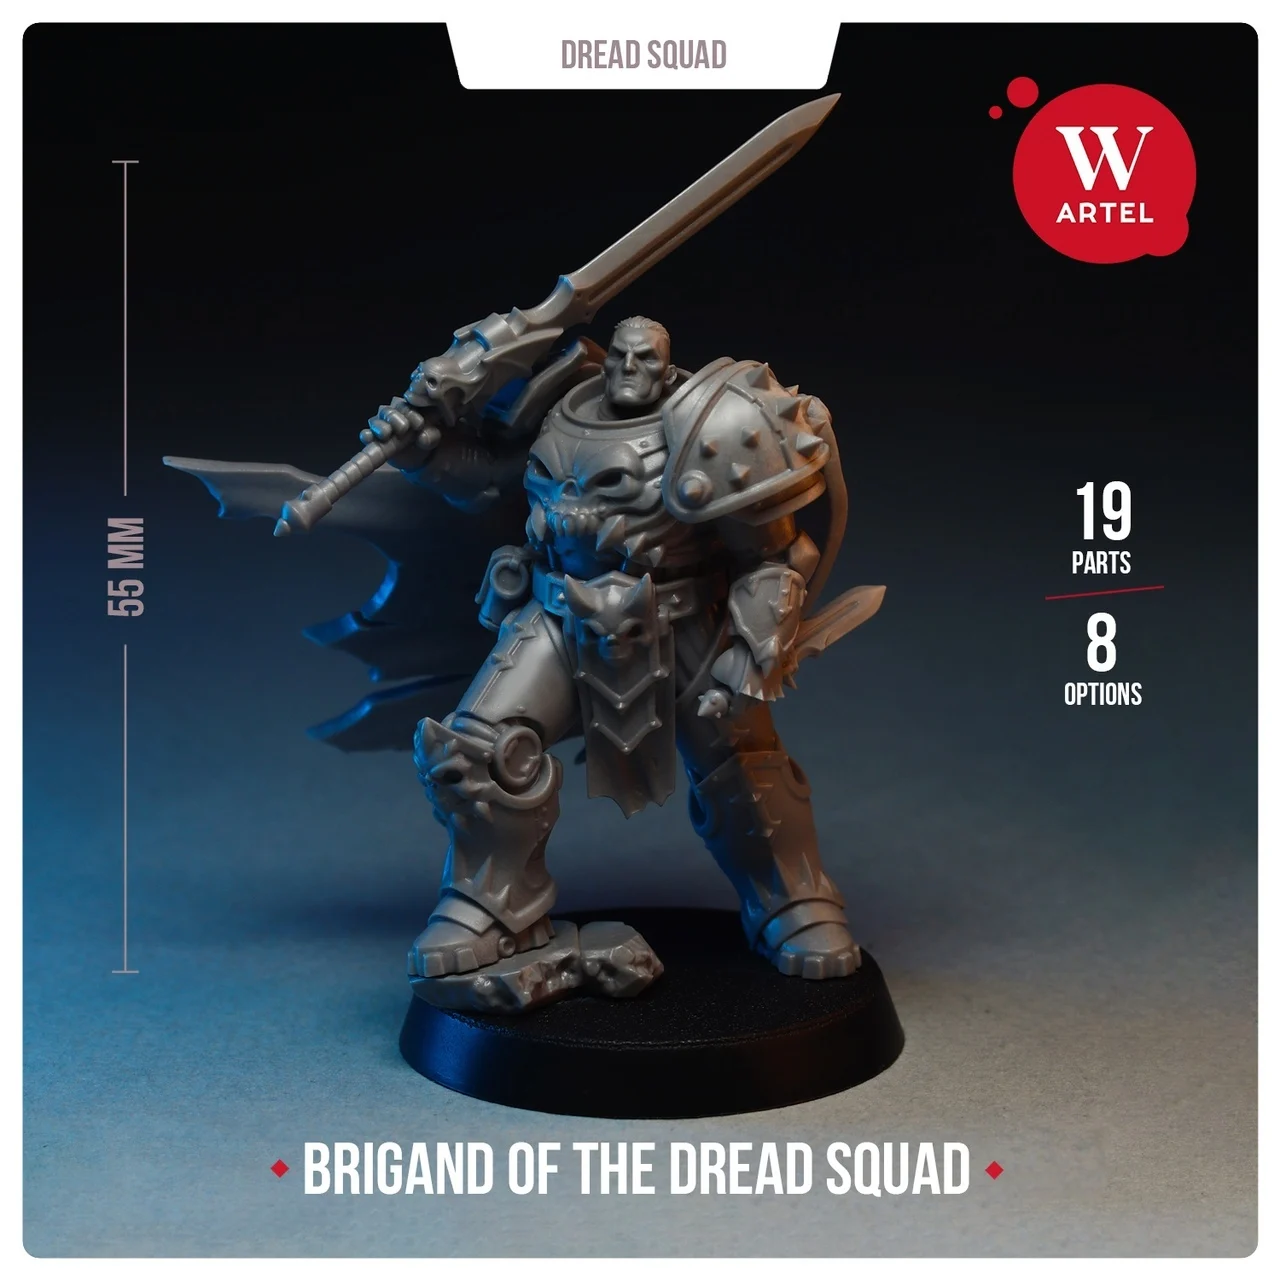 

Resin Model Artel "W" Miniatures Brigand of the Dread Squad Unpainted Garage Kit